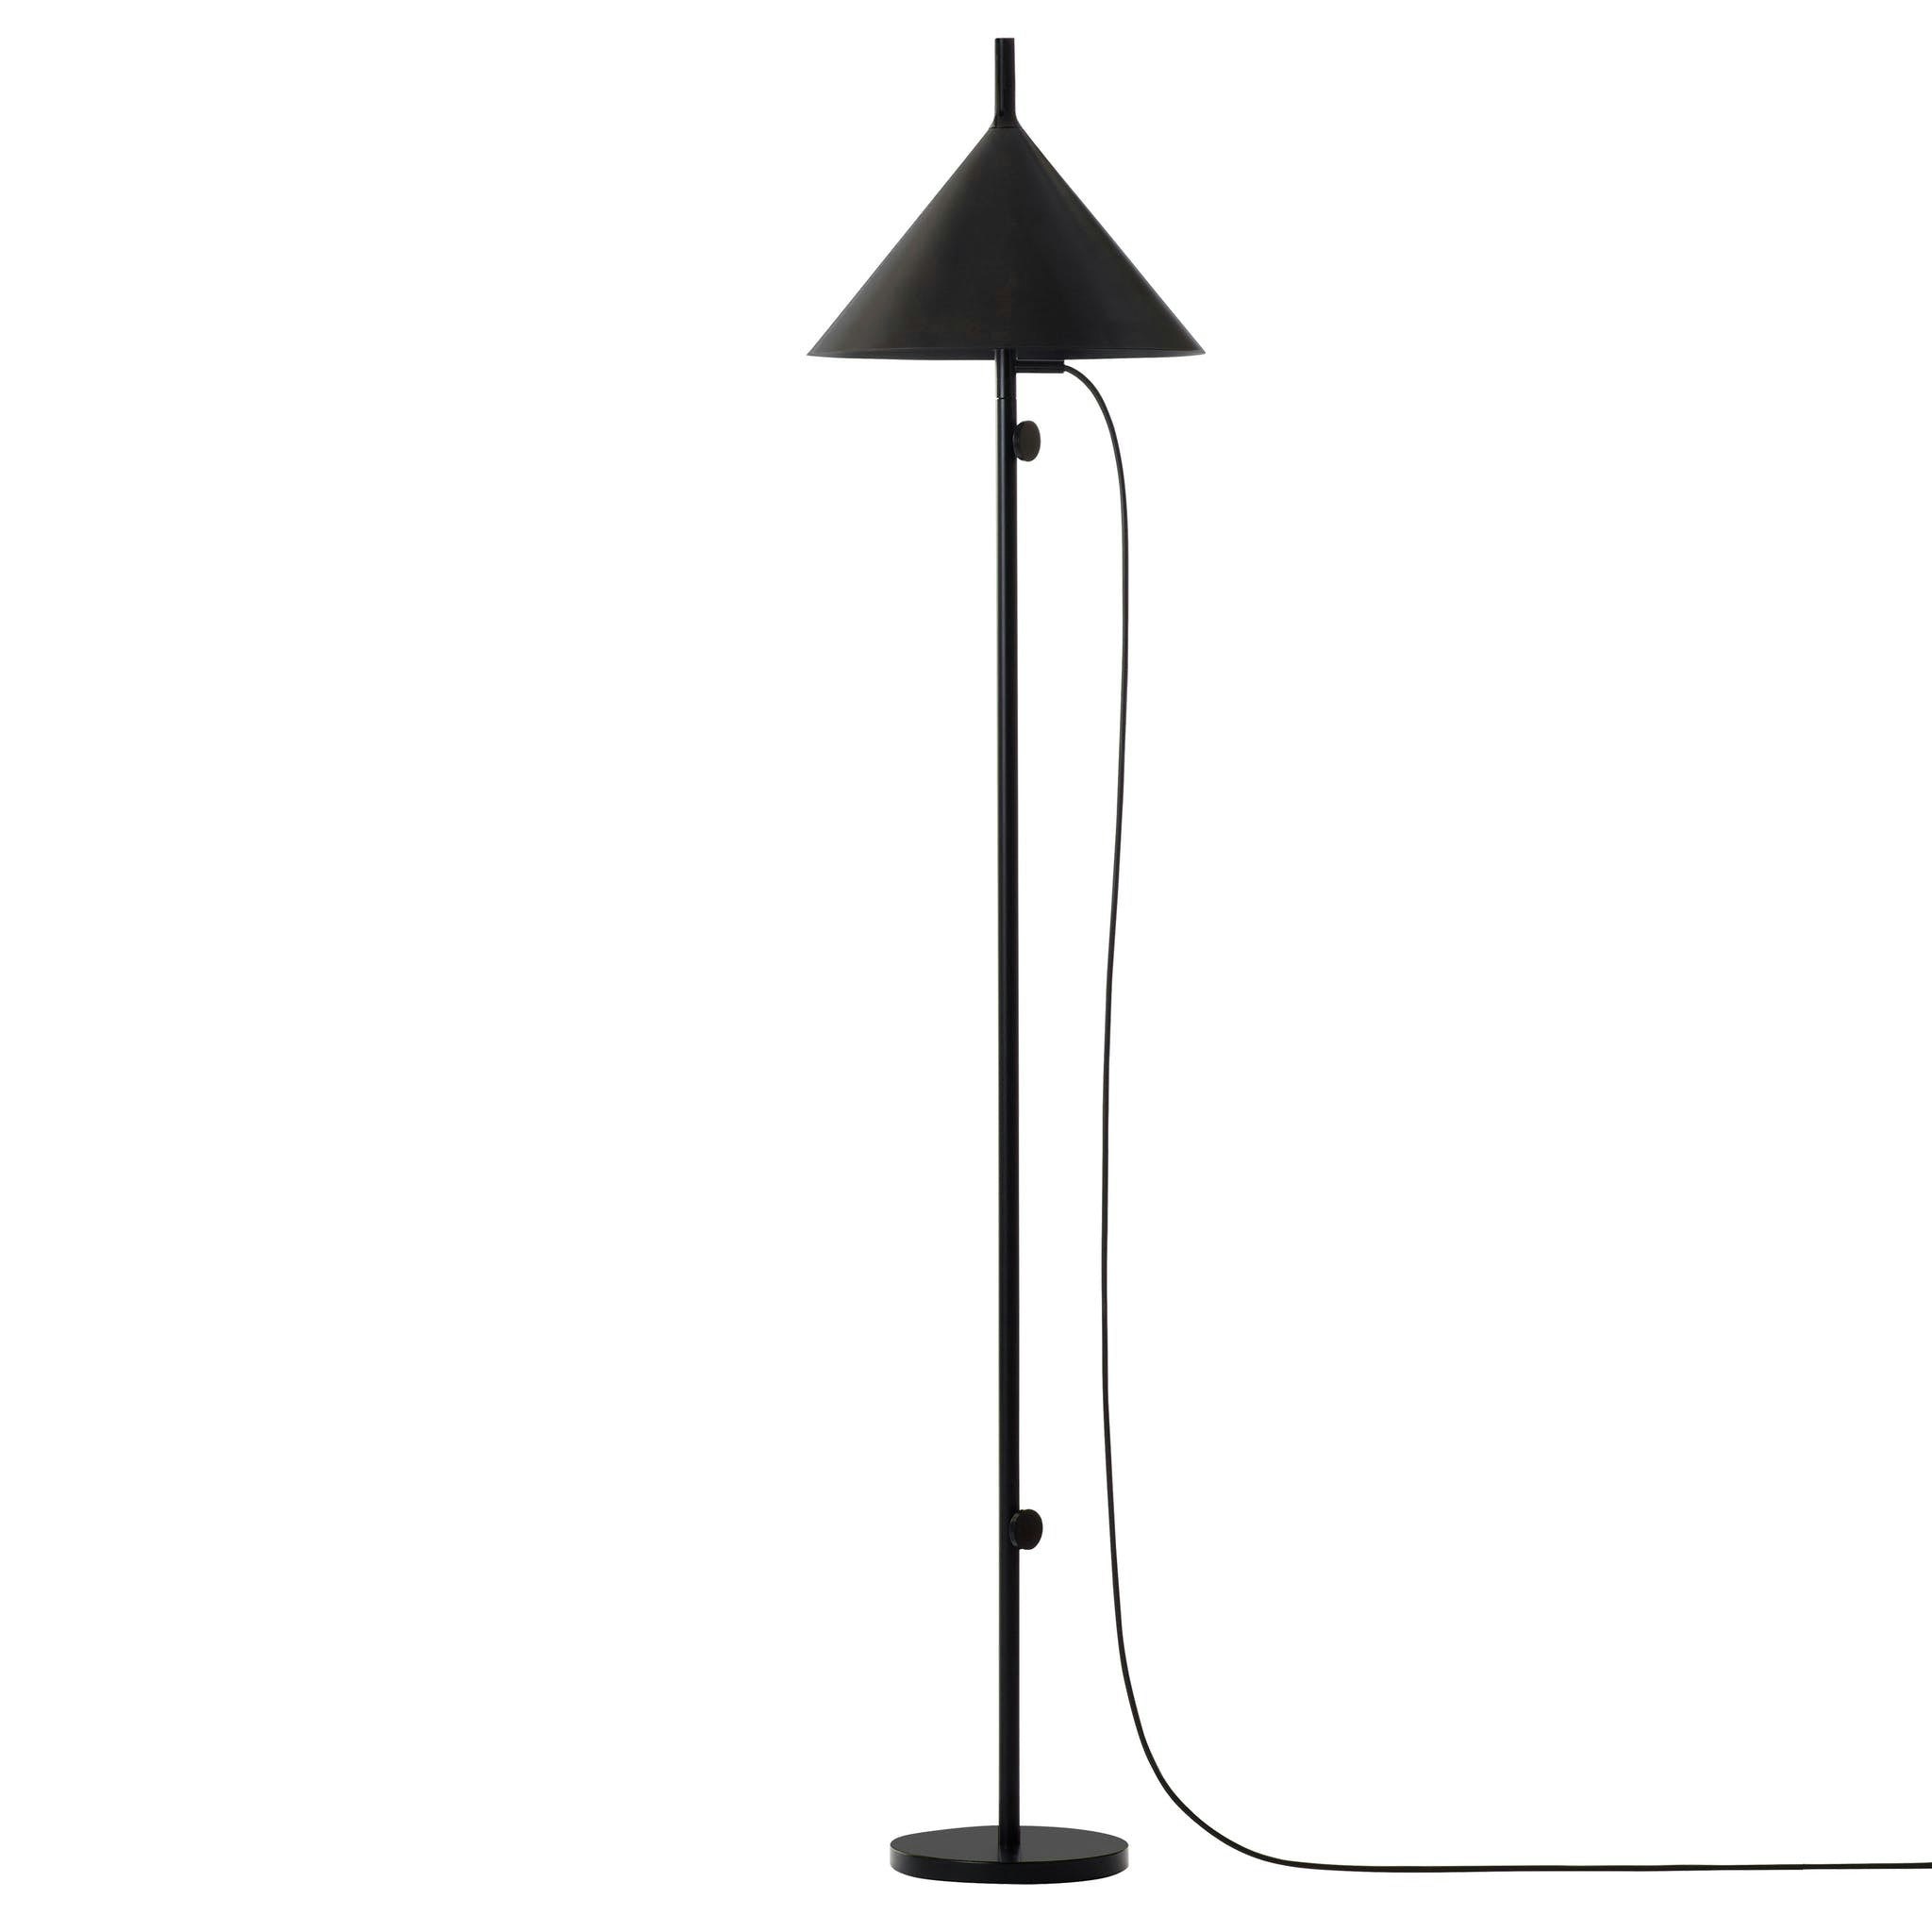 w132 Nendo Floor Lamp by Wastberg